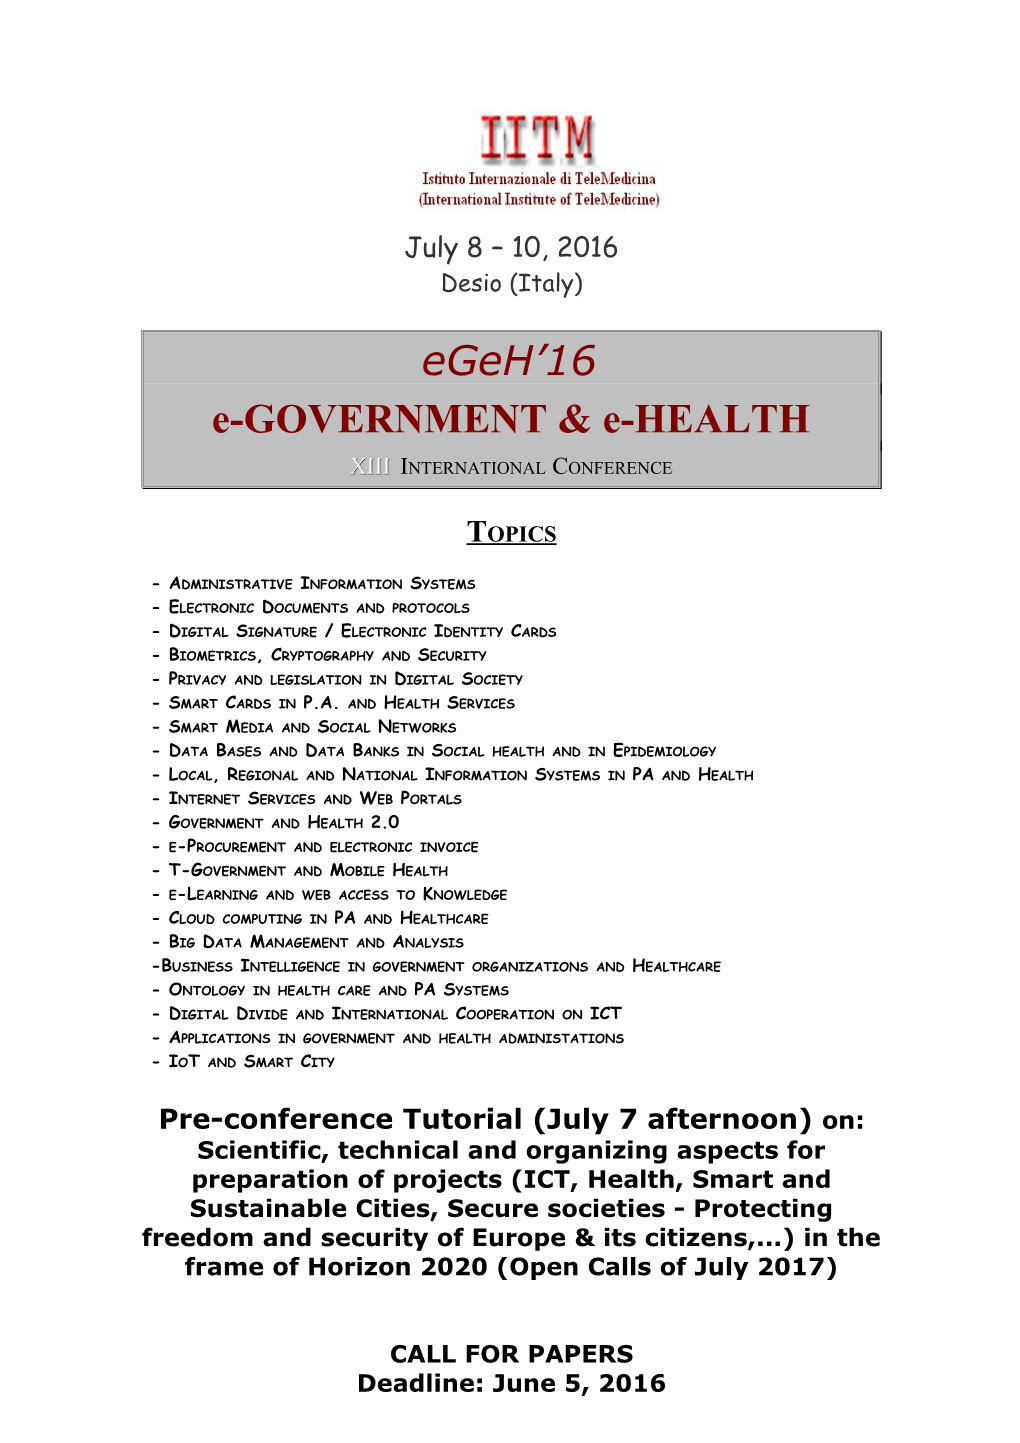 E-Government & E-Health